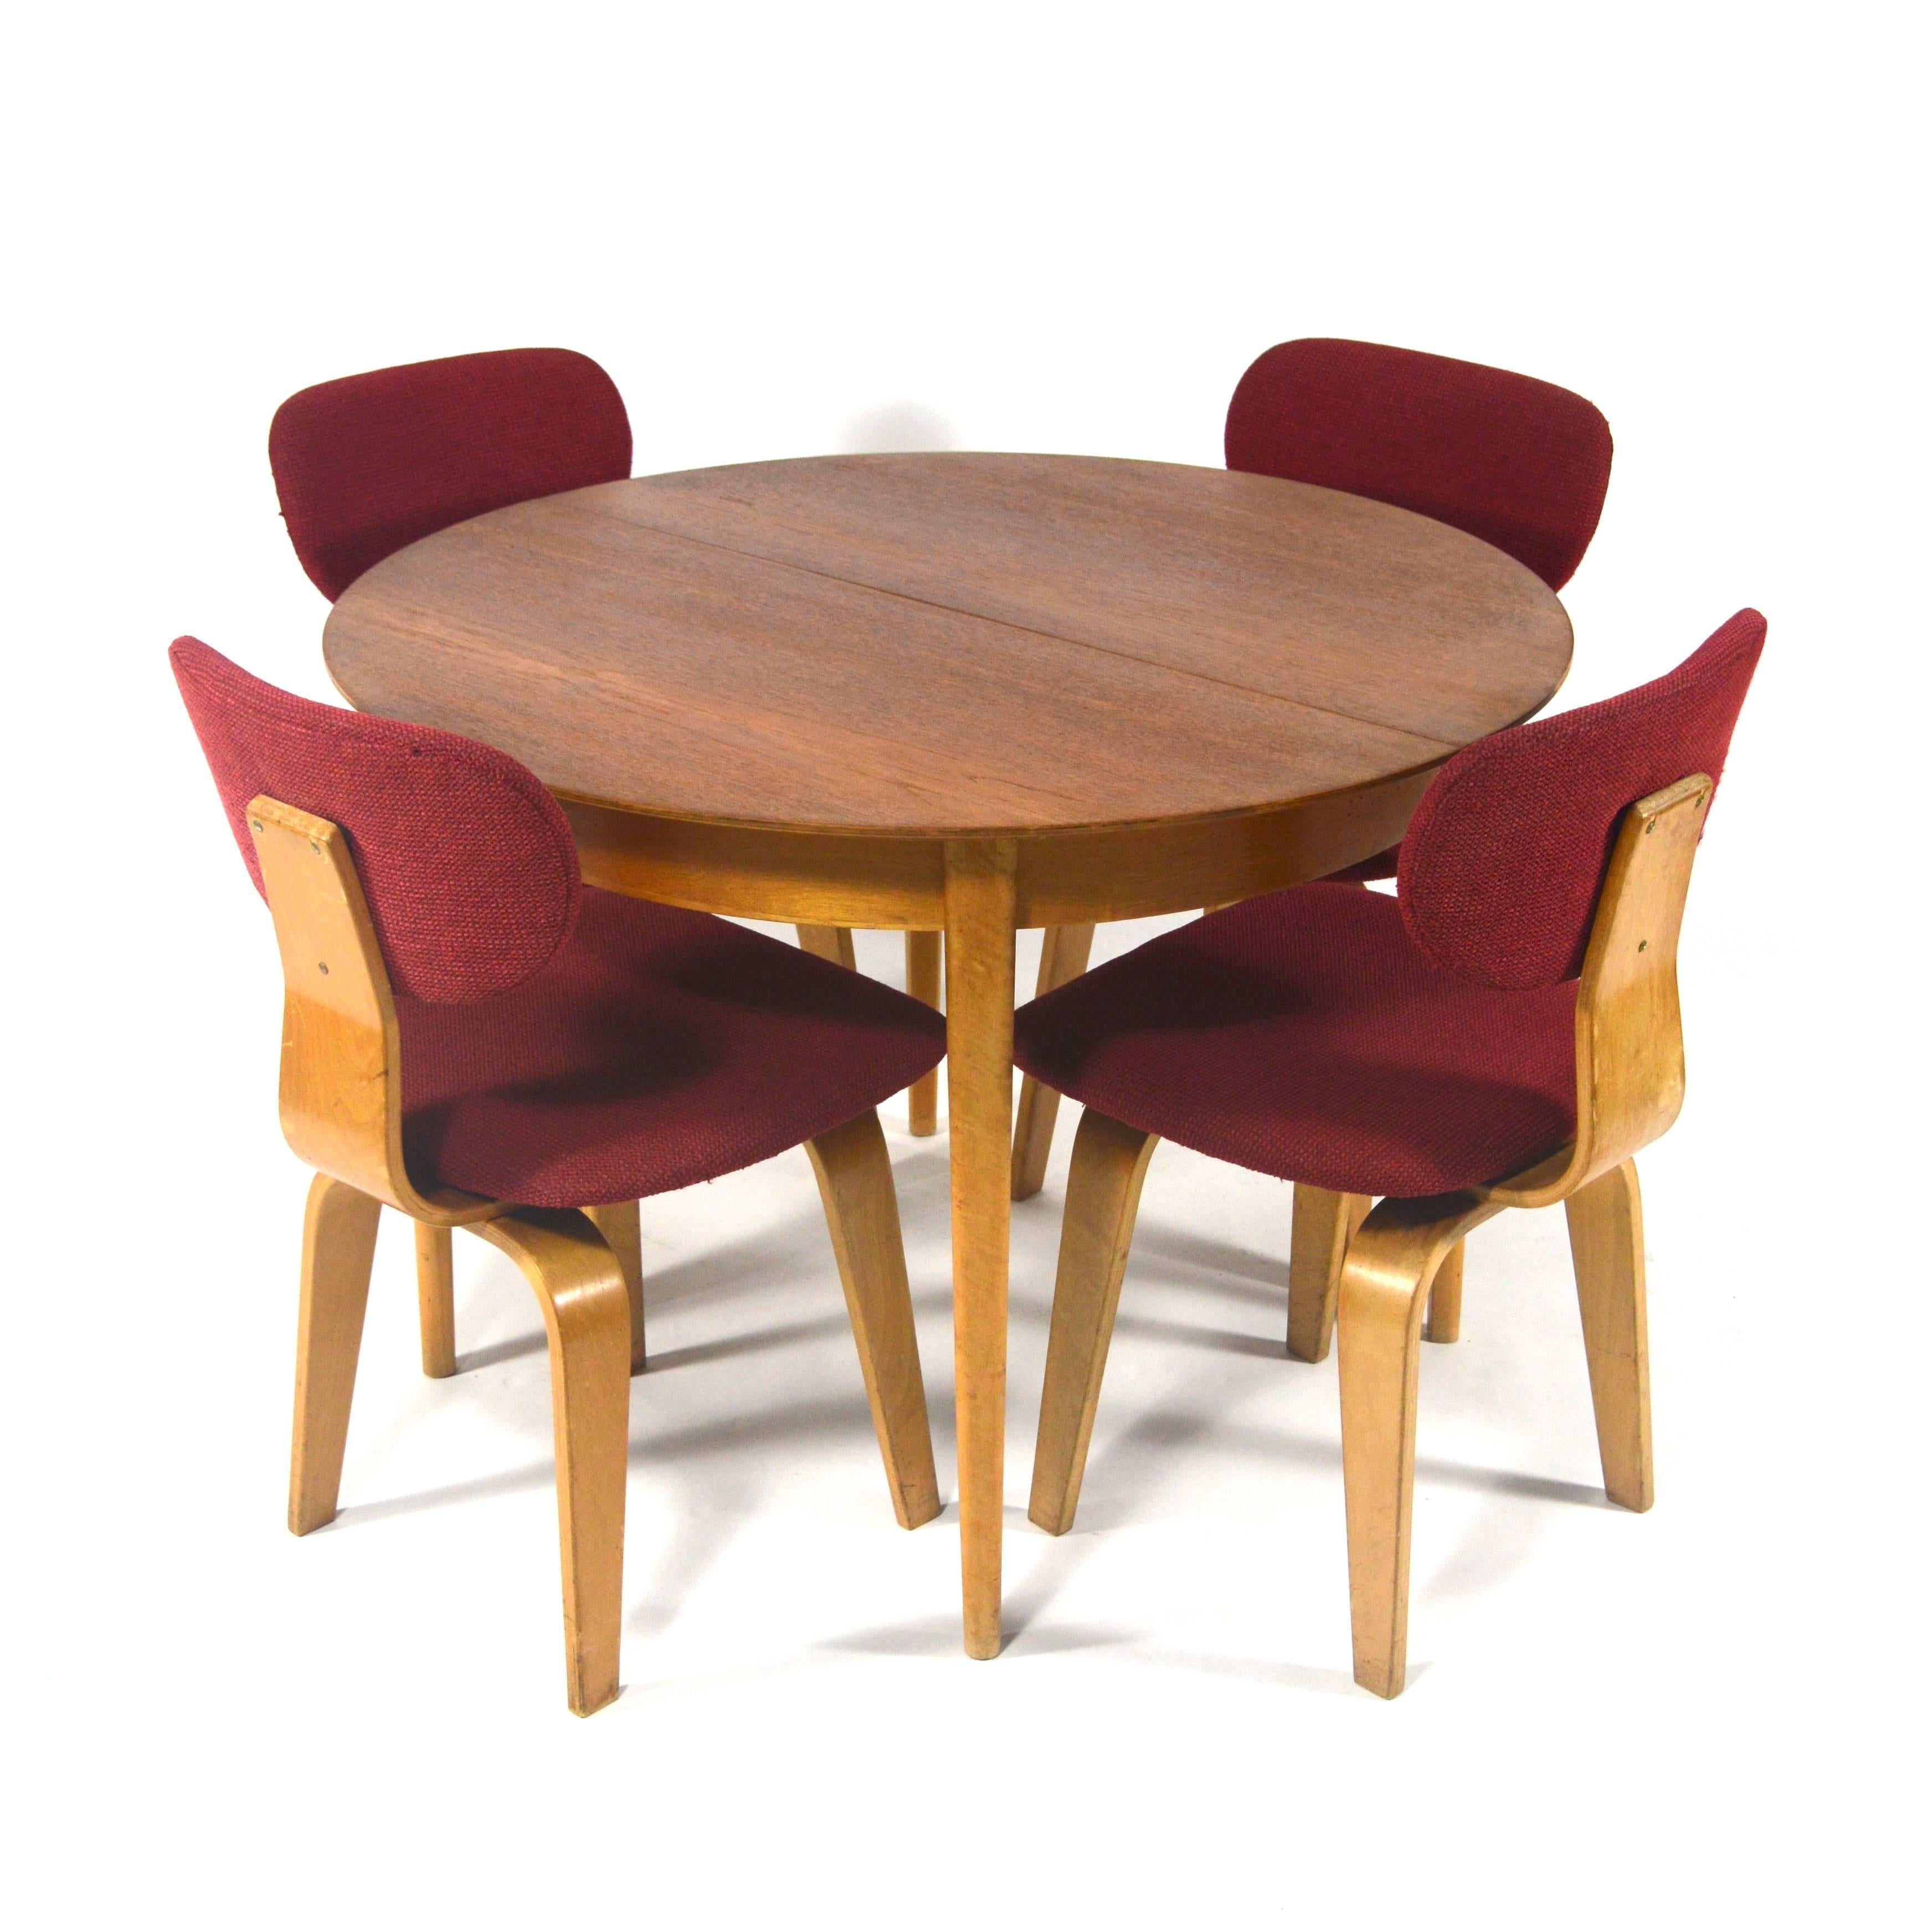 Mid-Century Modern Cees Braakman for Pastoe Birch Plywood and Teak Dining Set, Netherlands, 1950s